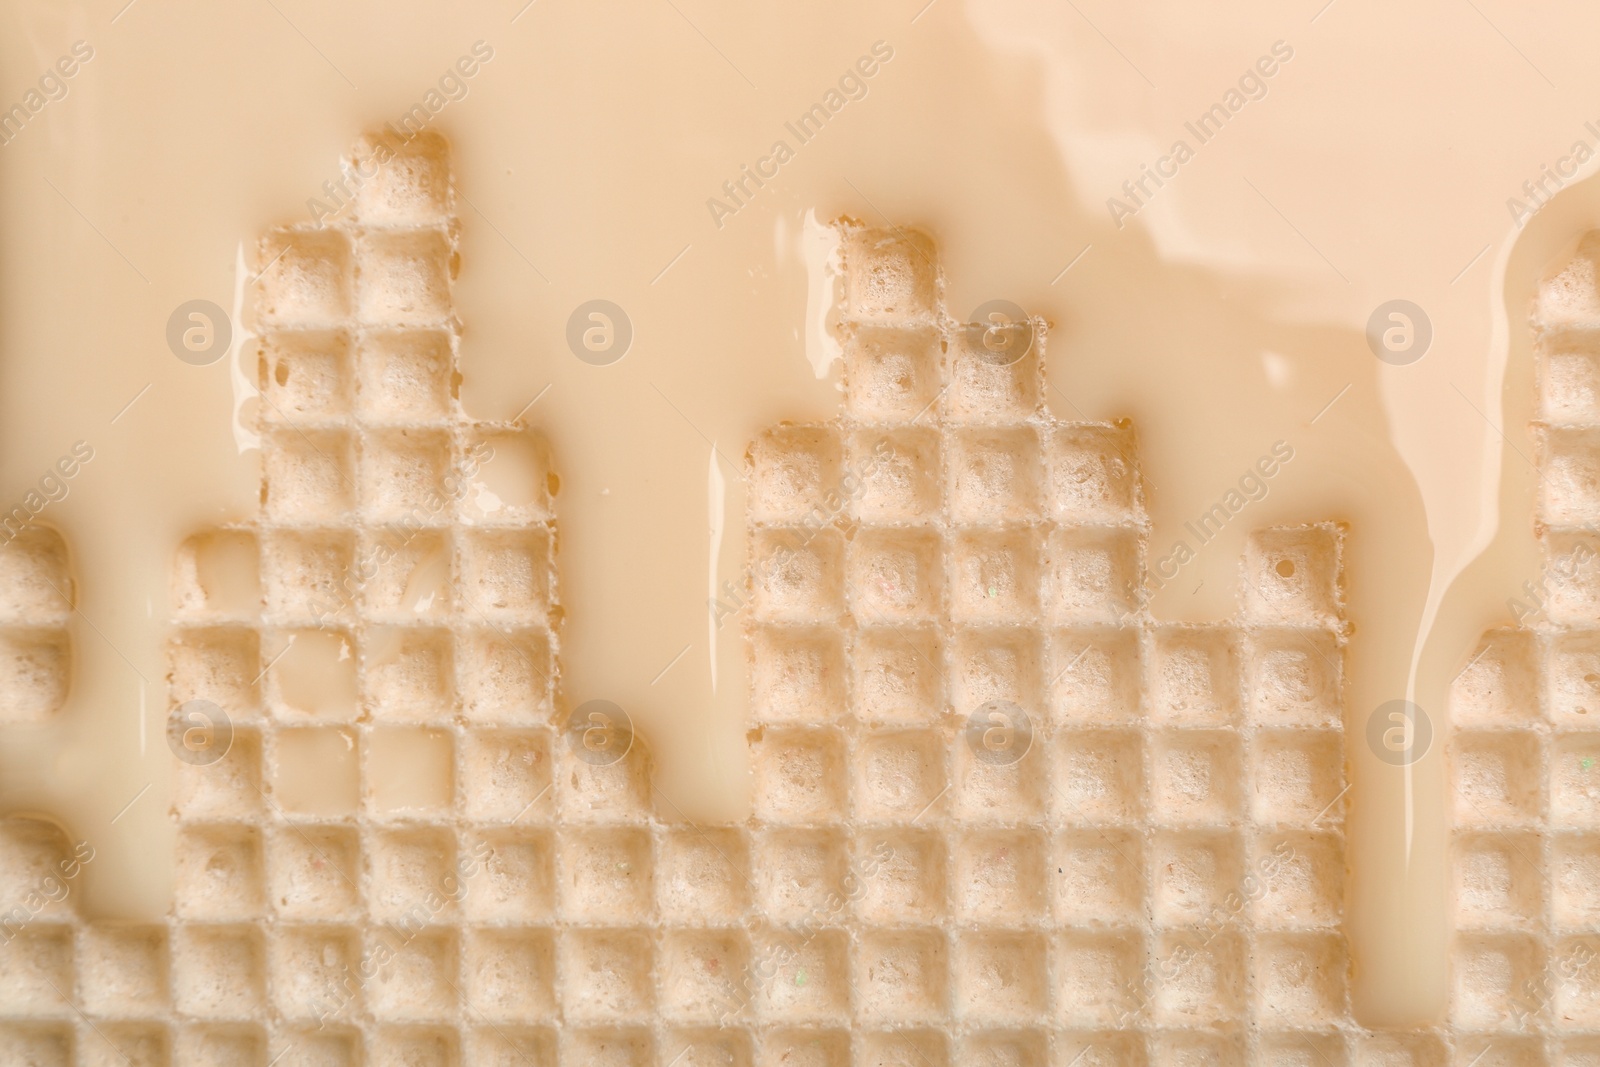 Photo of Hot white chocolate on wafer, closeup. Crispy food